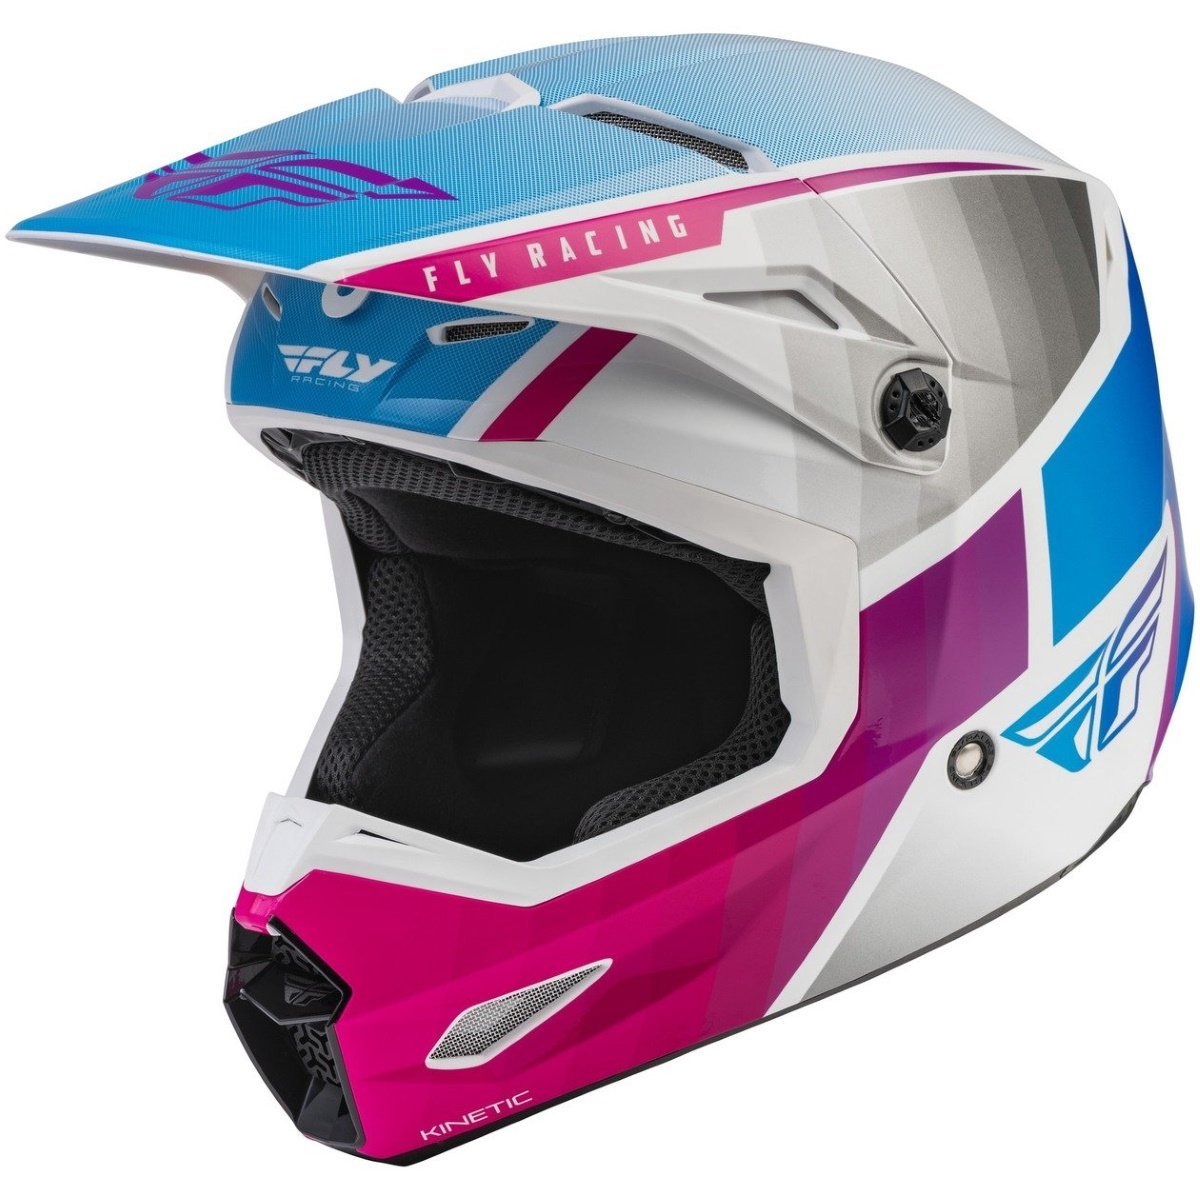 MX přilba FLY Racing KINETIC Drift růžová/bílá/modrá XL (61/62)